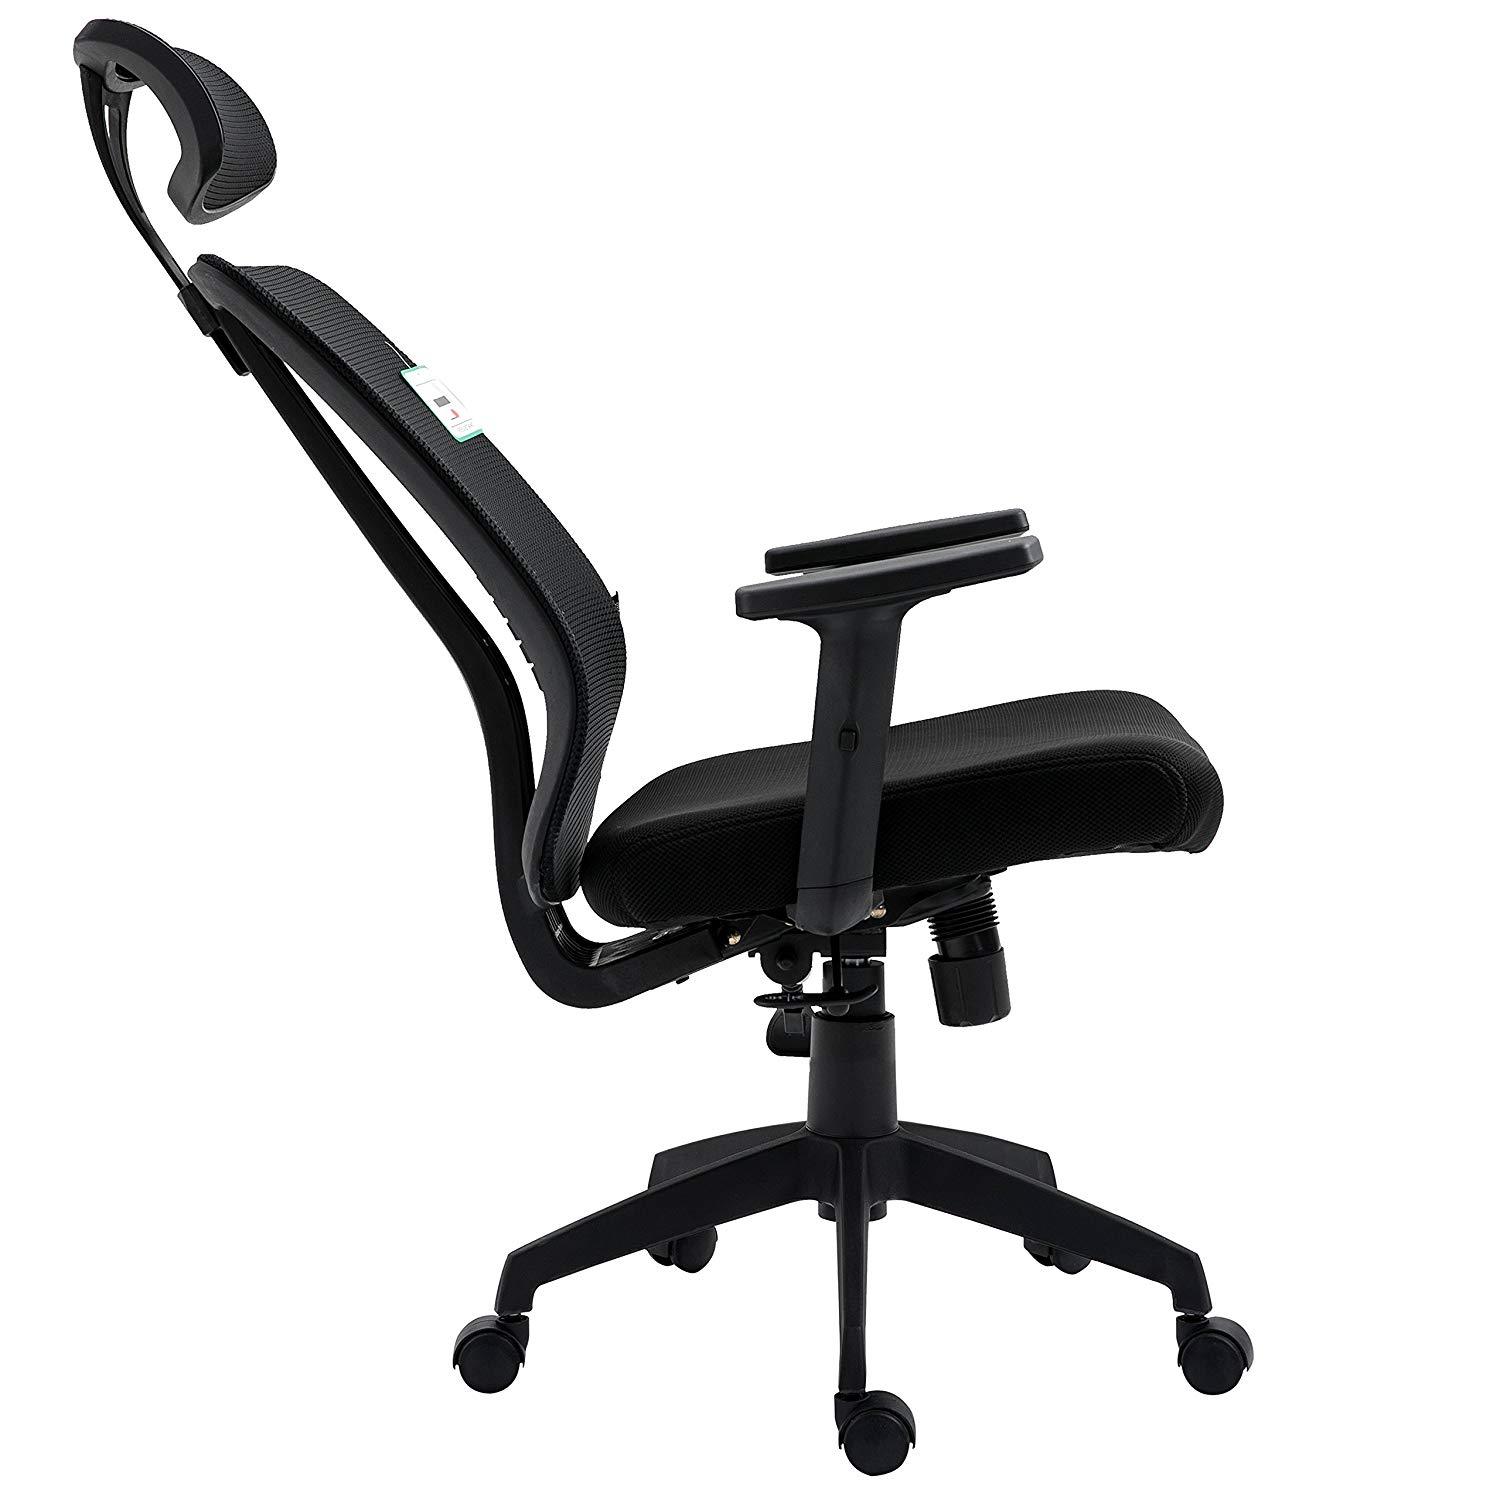 Black Mesh High Back Executive Office Chair Swivel Desk Chair with Synchro-Tilt, Adjustable Armrest & Headrest